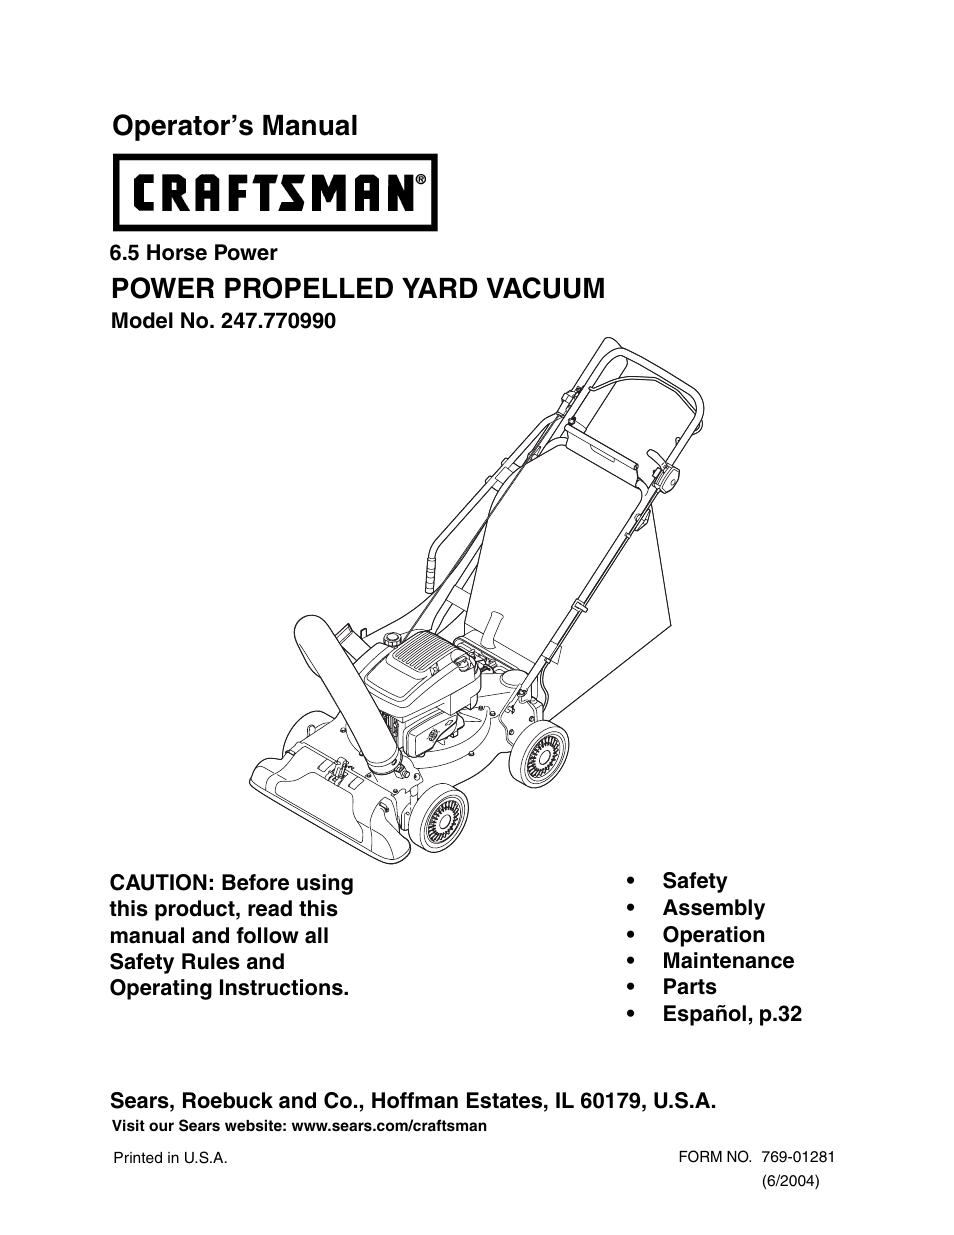 Craftsman 247.77099 User Manual | 52 pages